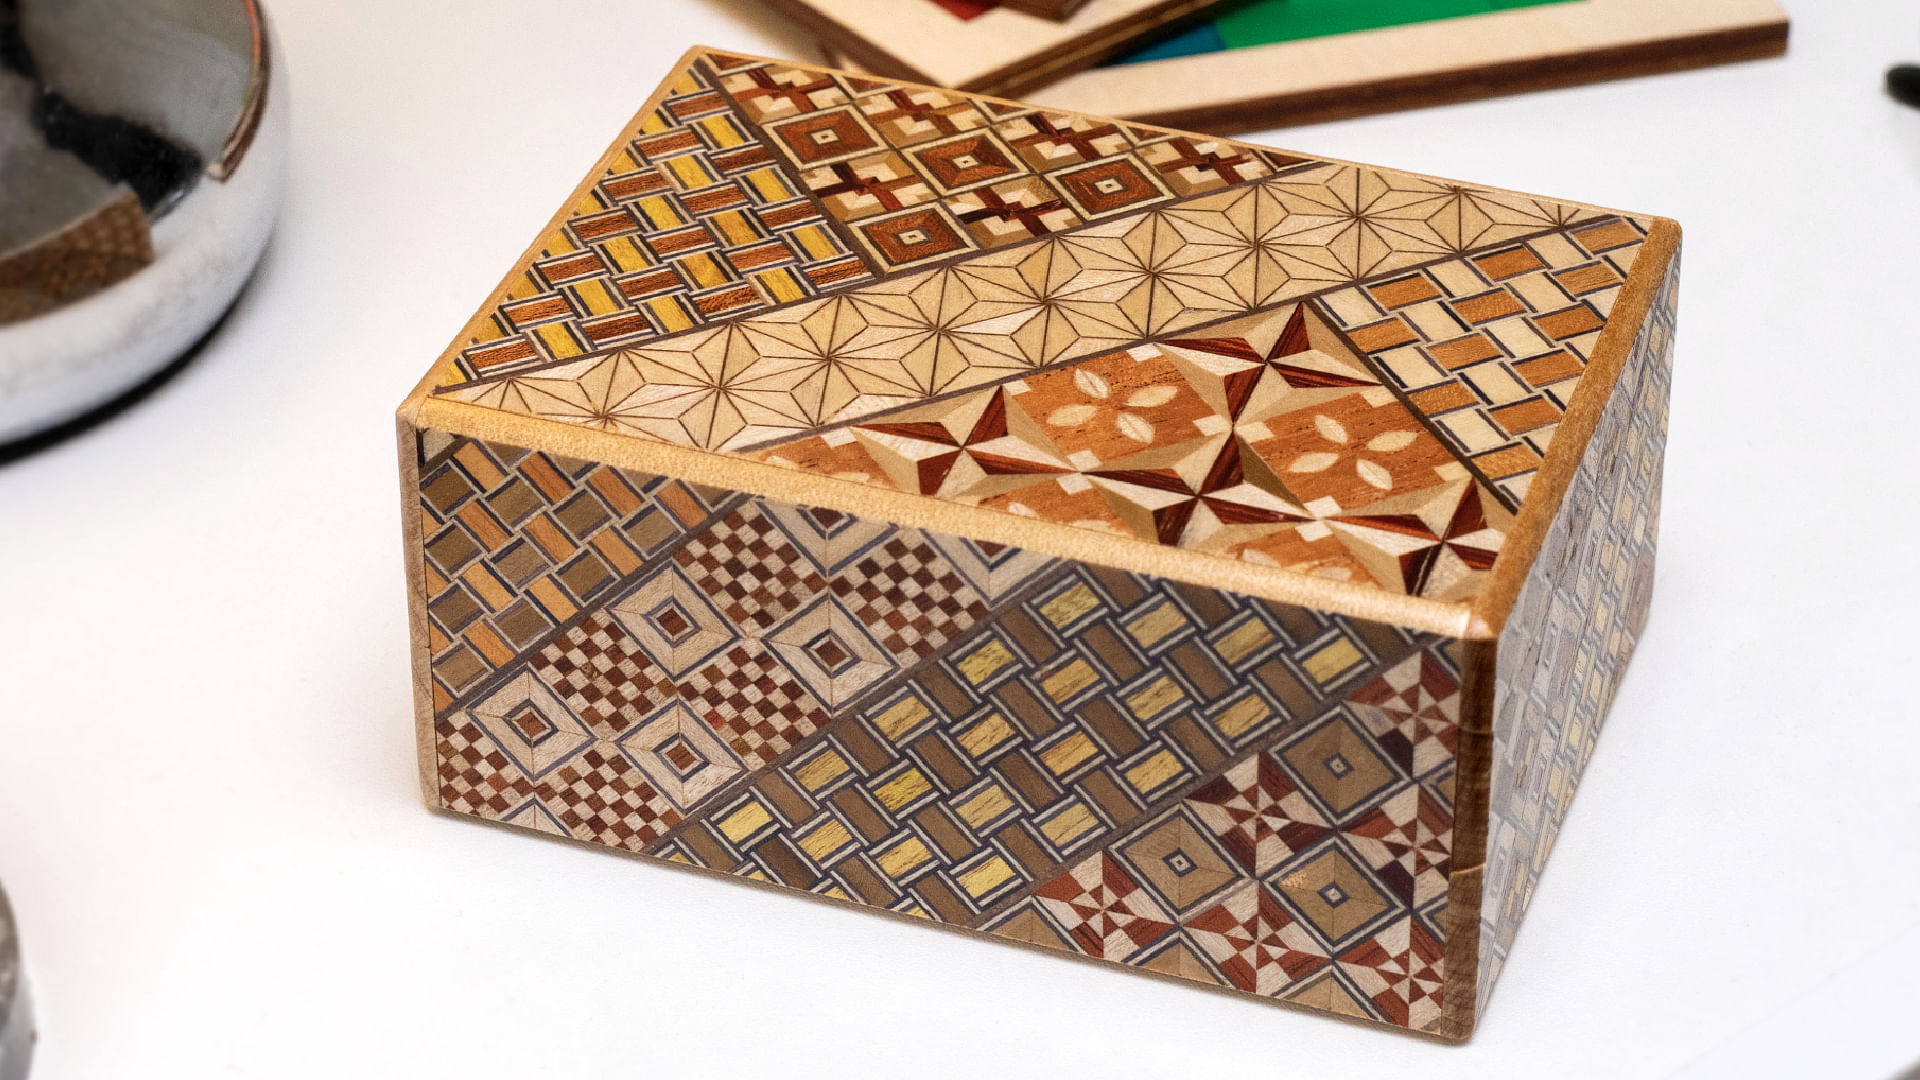 Hakone parquet work Japanese secret Puzzle Hidden Magic box Traditional craft 